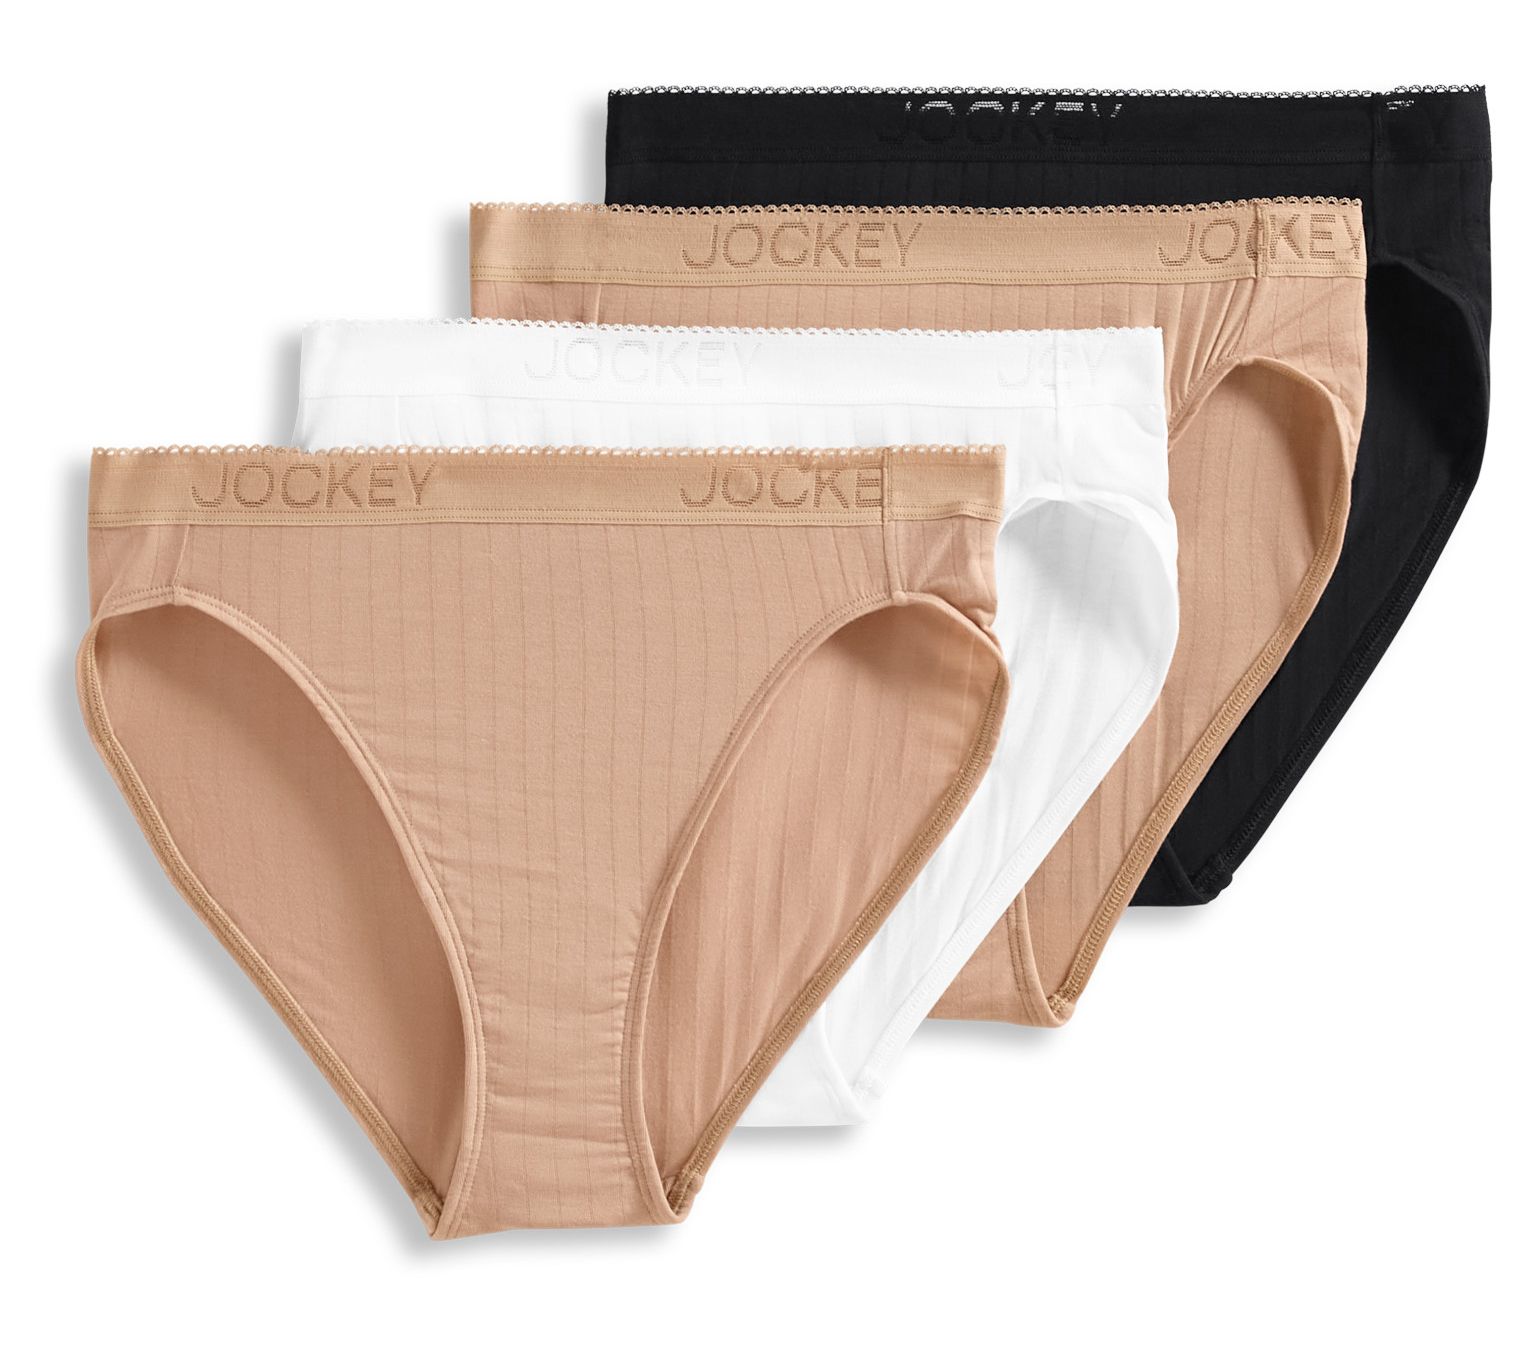 Jockey Elance Breathe Cotton Brief Panty Set of 6